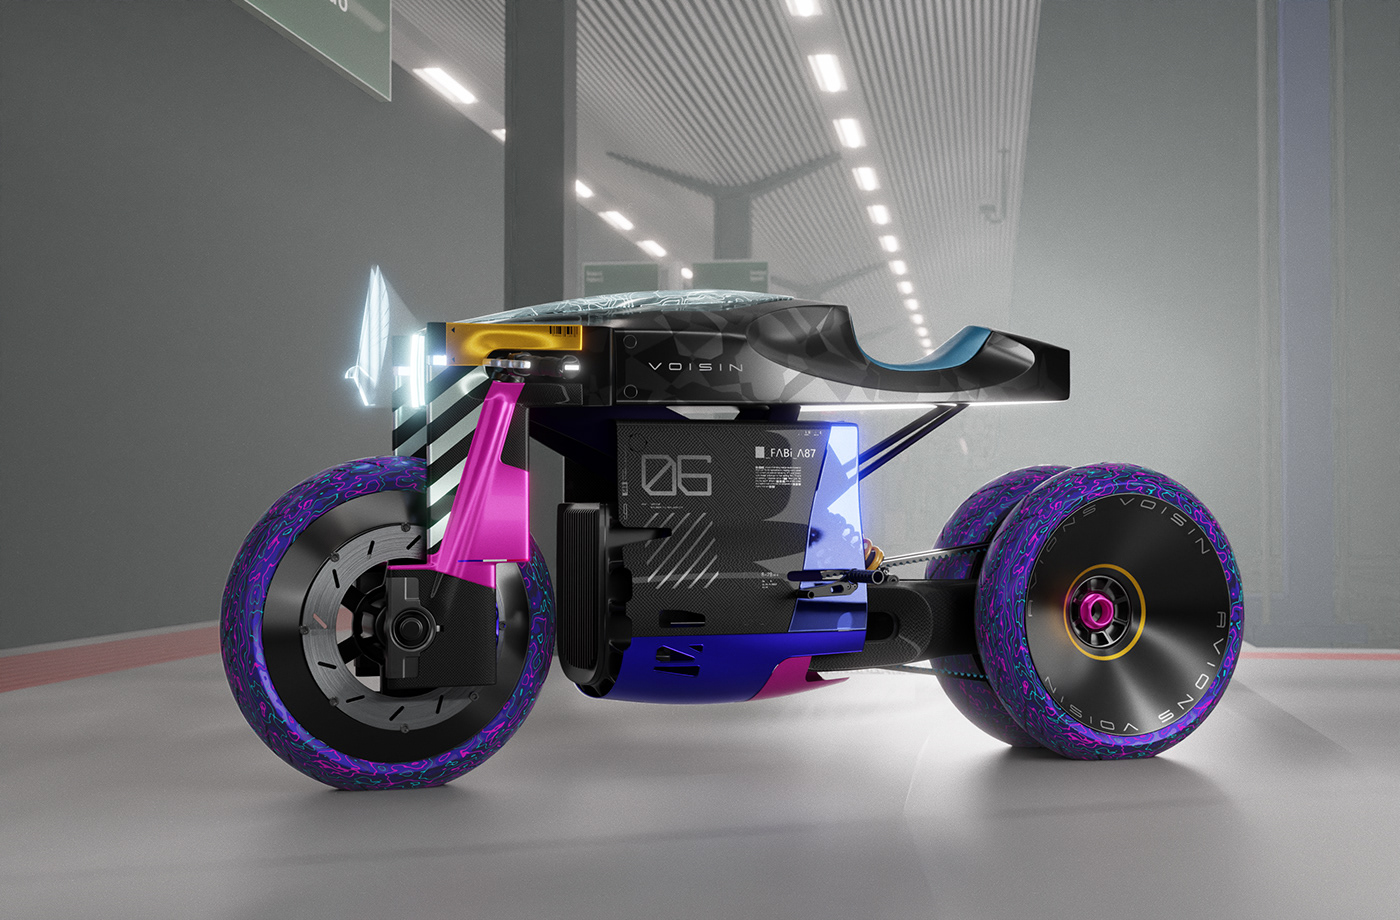 concept concept art Cyberpunk design industrial design  motorcycle Automotive design